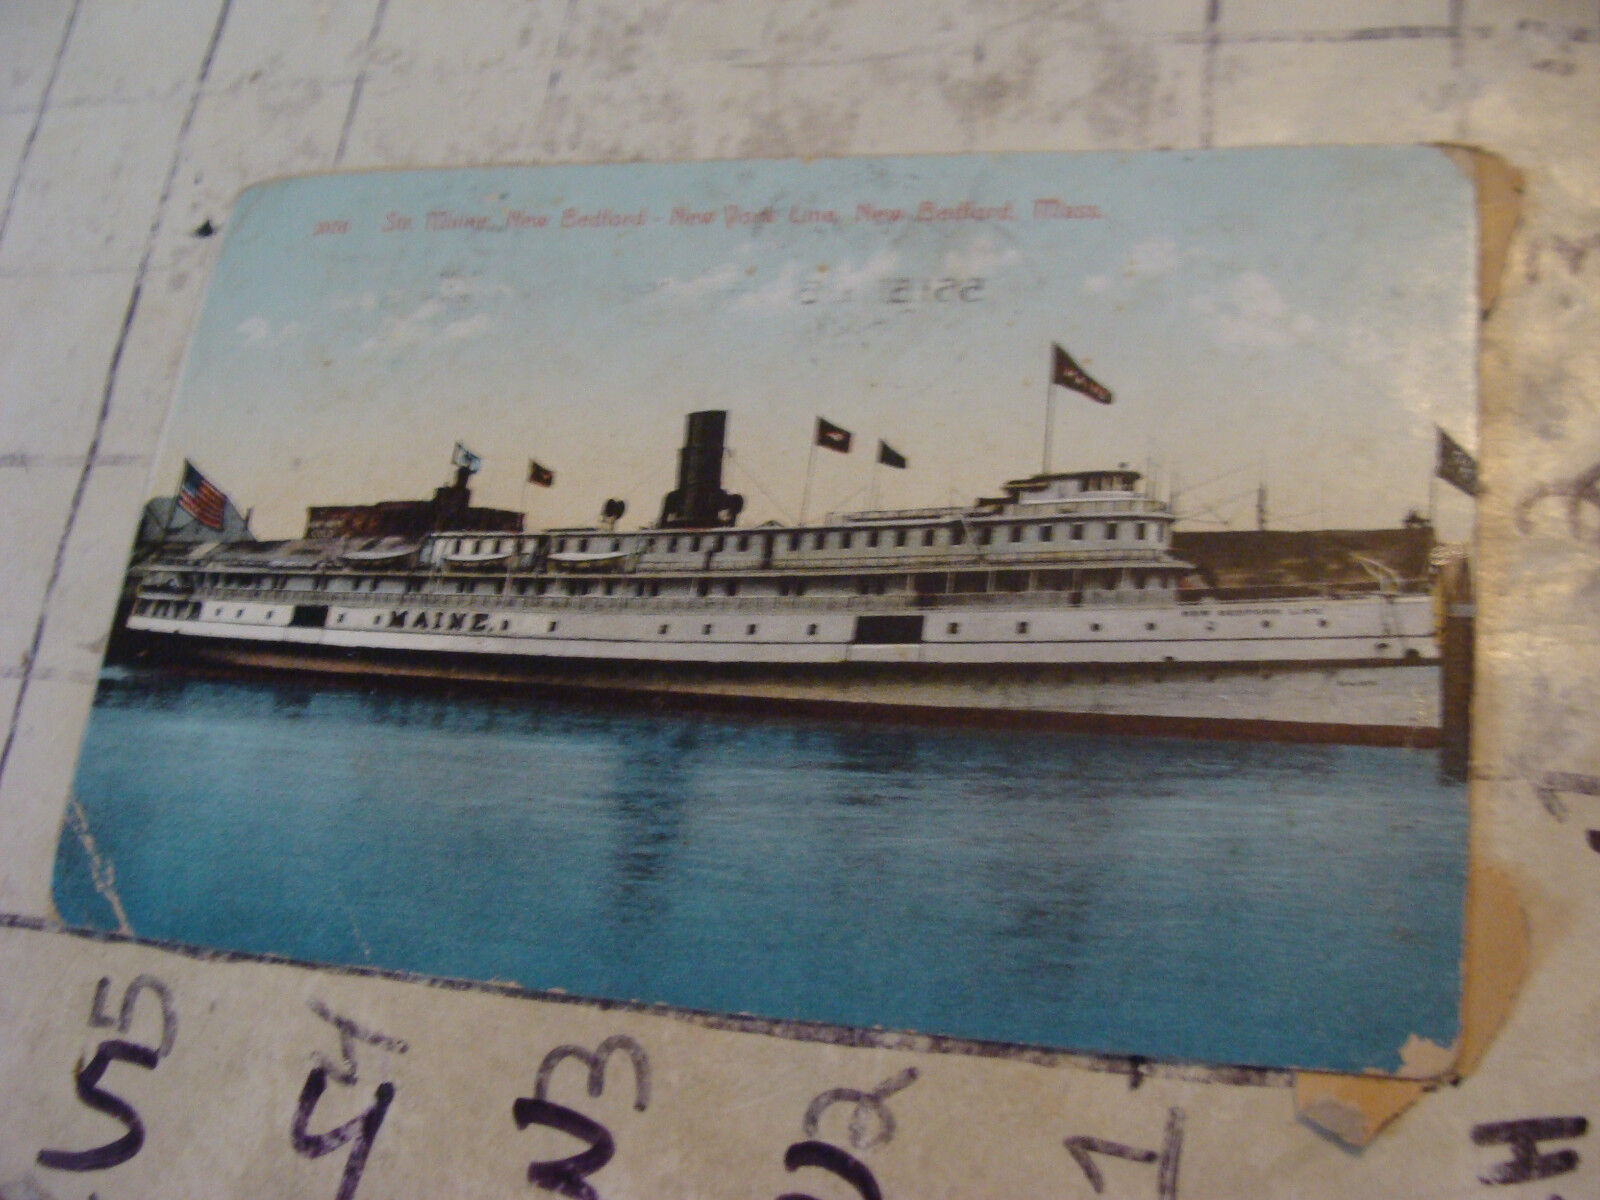 Orig Vint post card 1910 str. maine, new bedford, new york line, new bedford mas